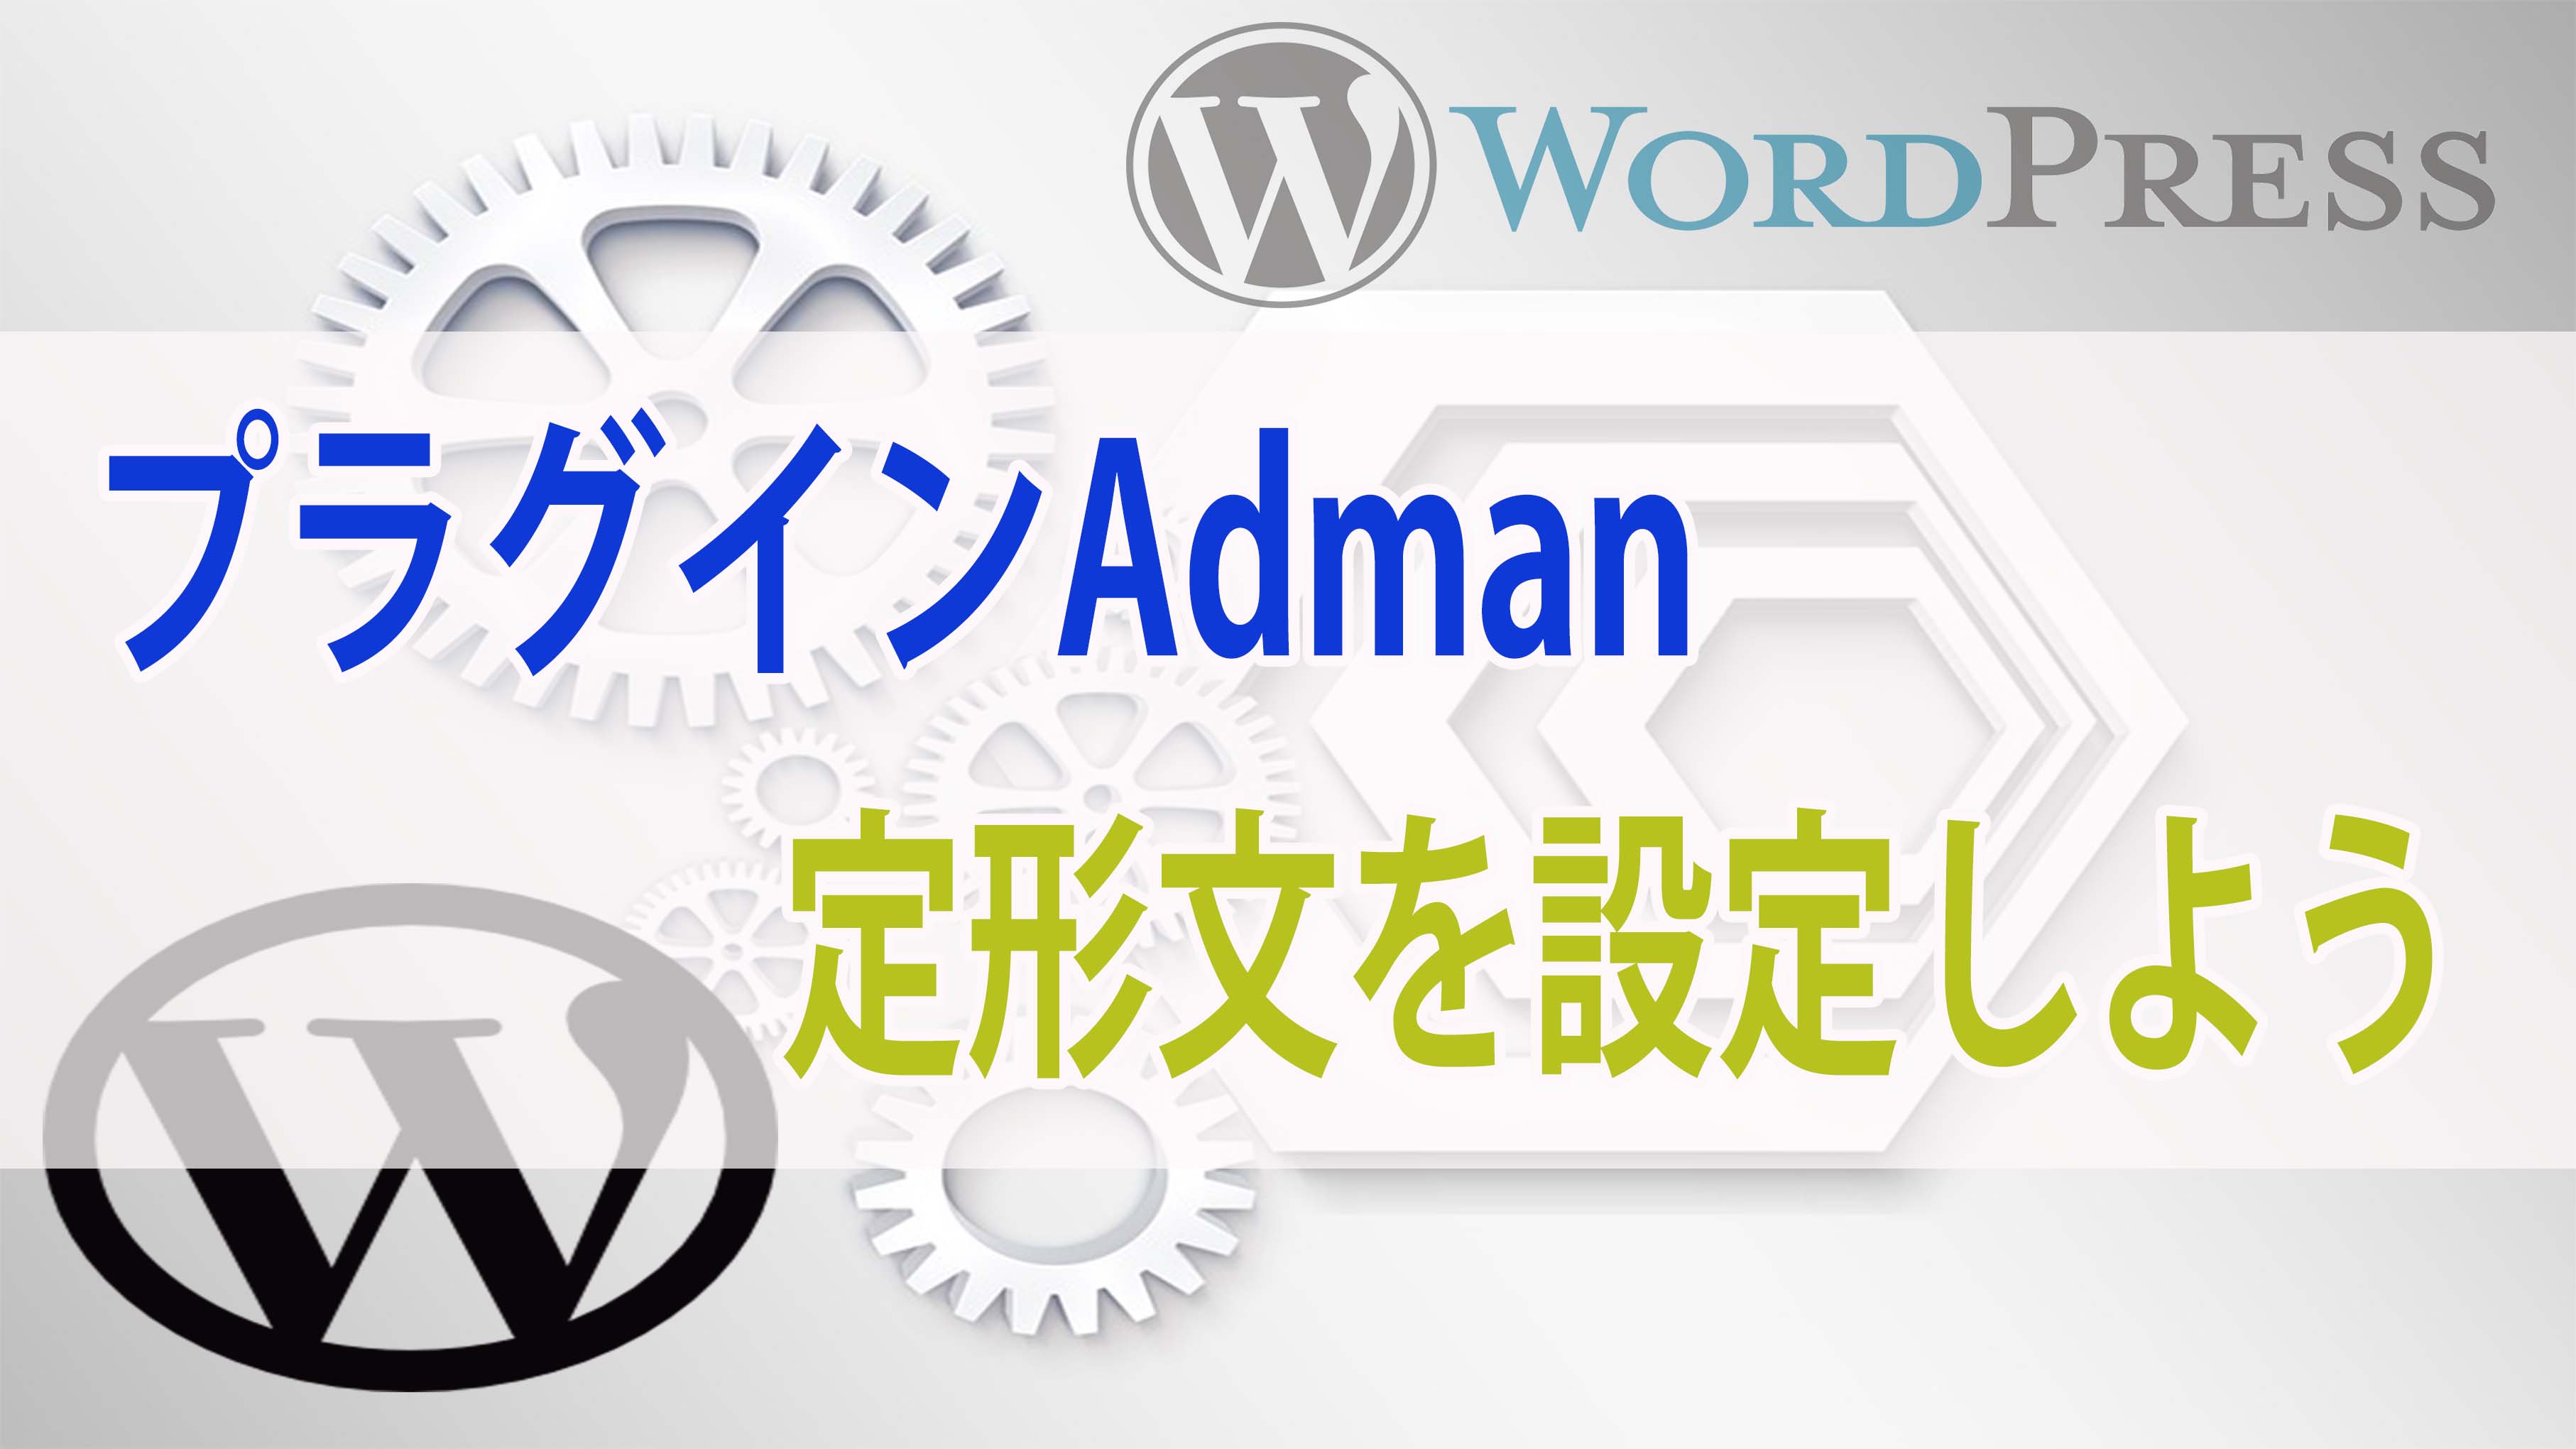 WordPressプラグイン【Adman】で記事にバナーや定形文を設置する方法を解説